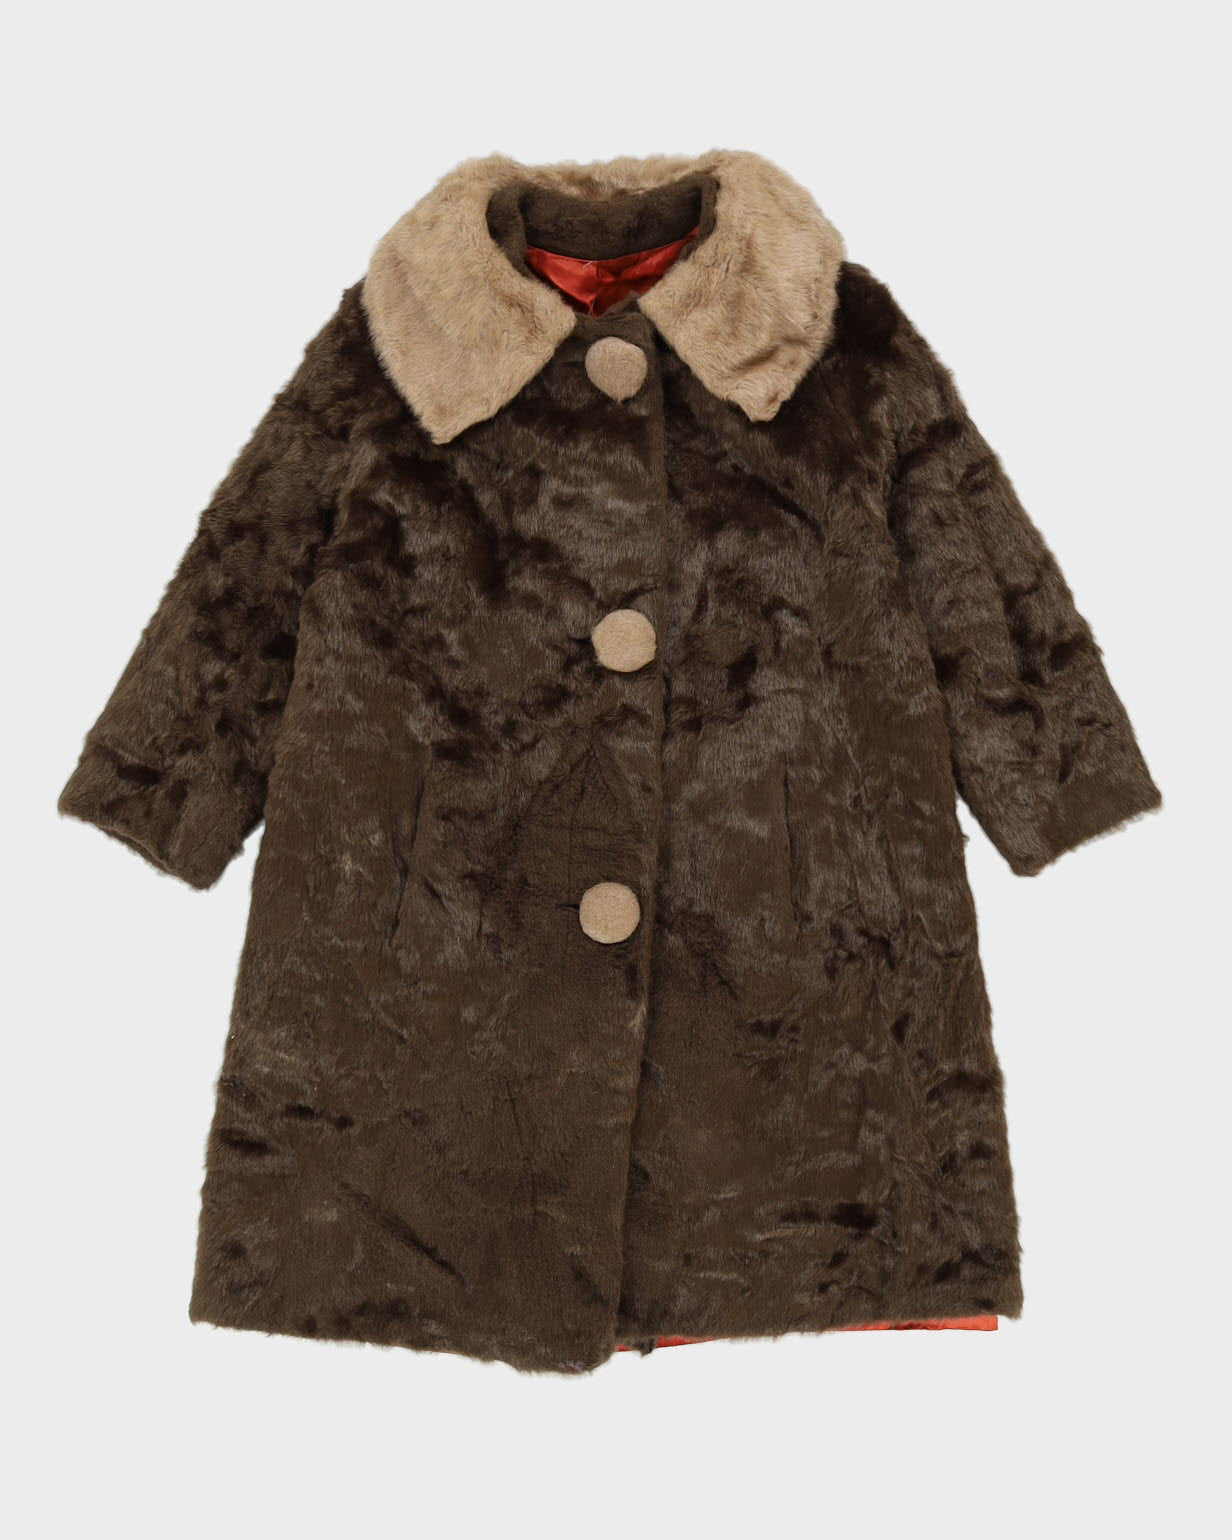 Vintage 1960s Brown Faux Fur Jacket - S